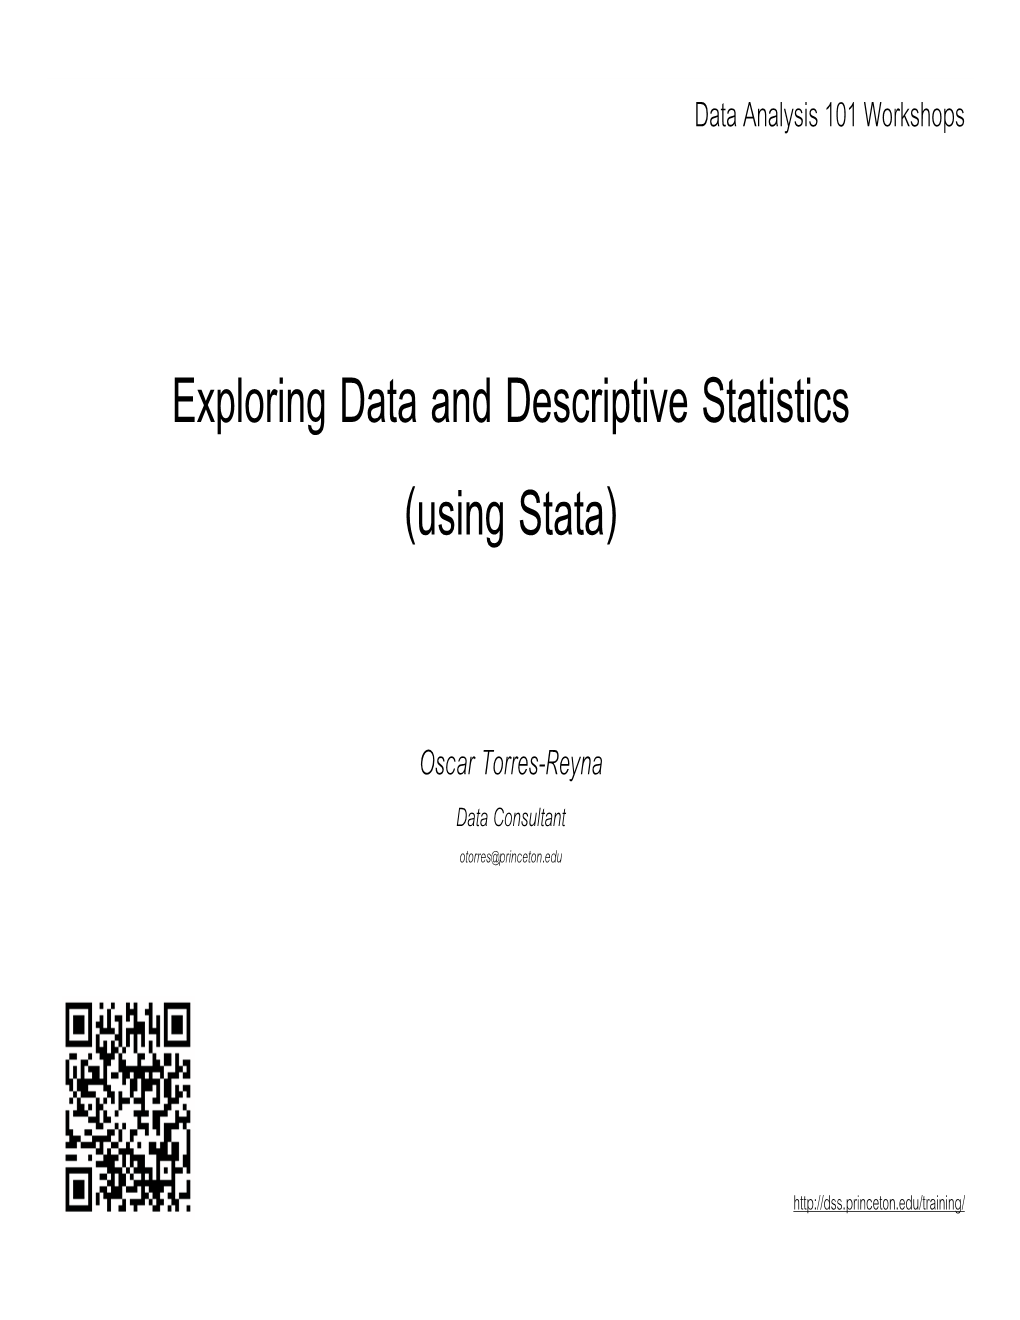 Exploring Data and Descriptive Statistics (Using Stata)